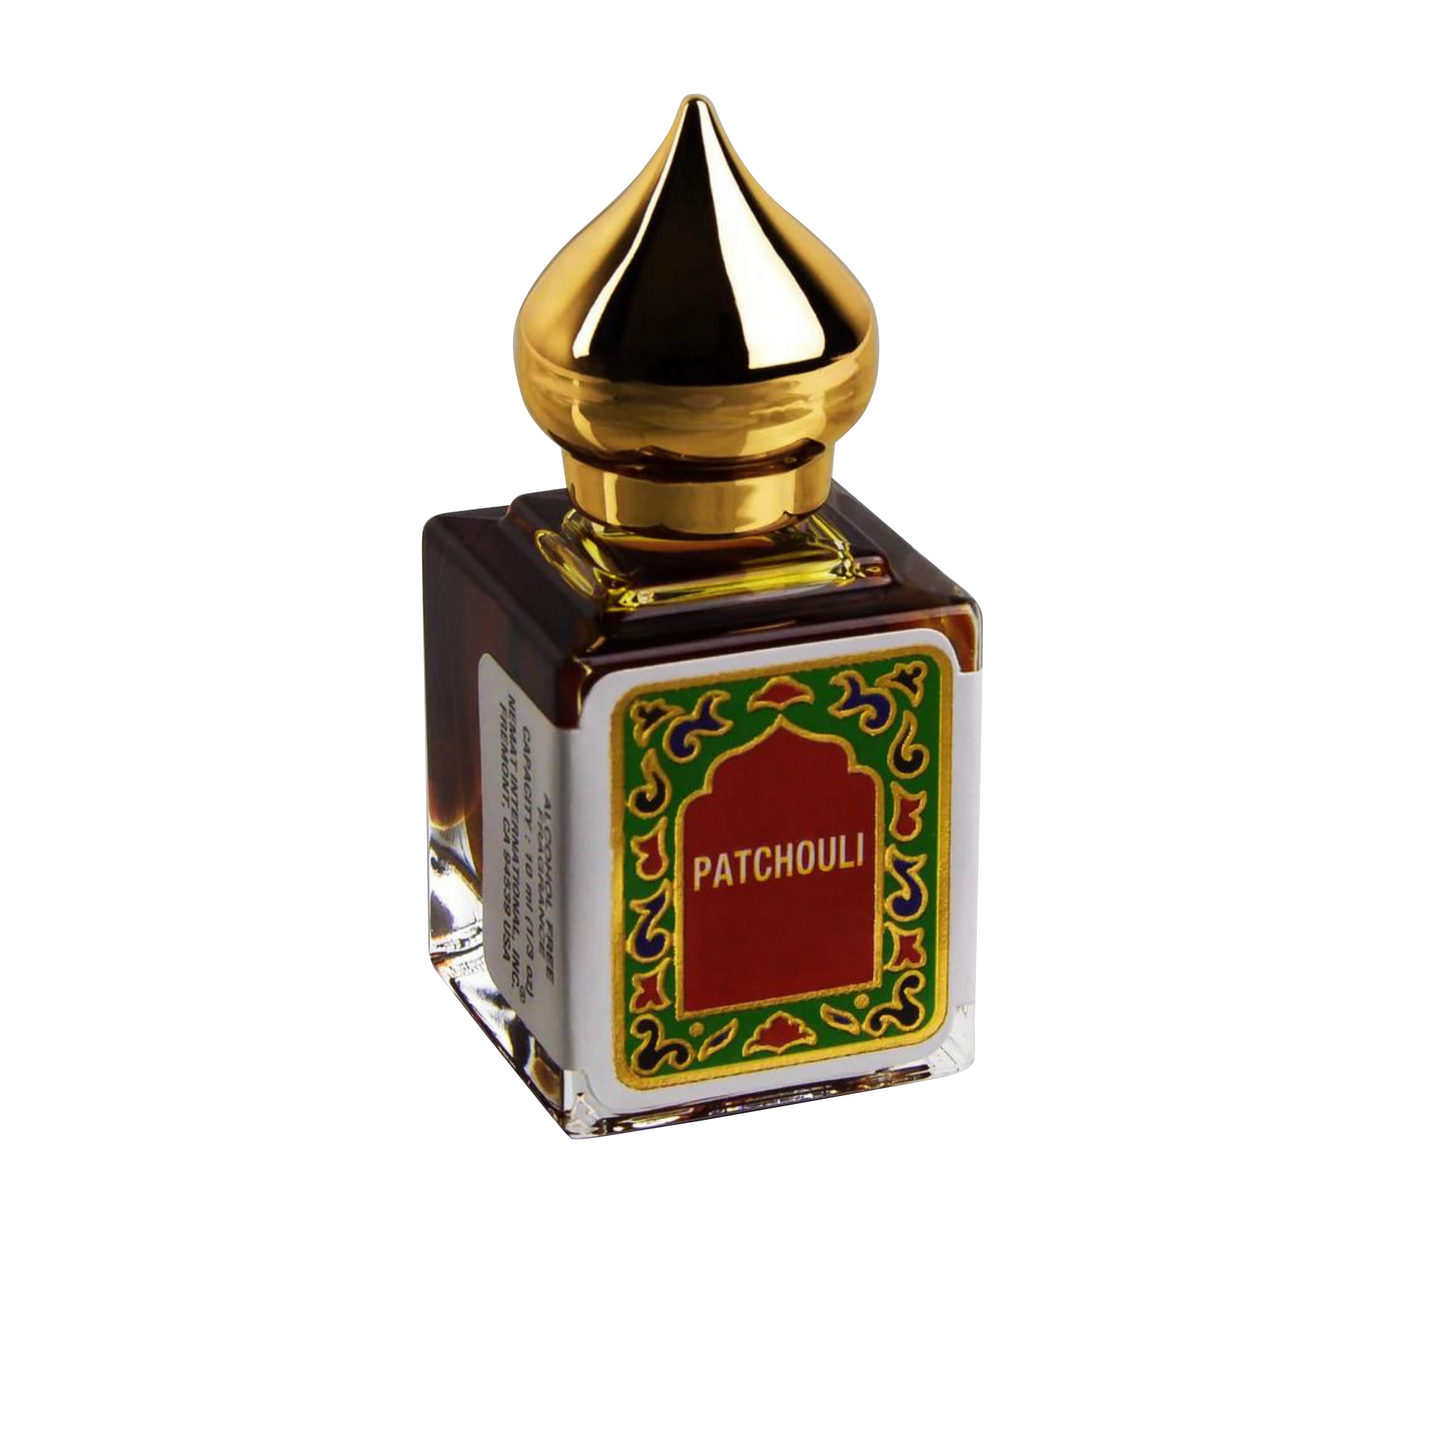 Primary image of Attar Patchouli Fragrance Minaret Cap